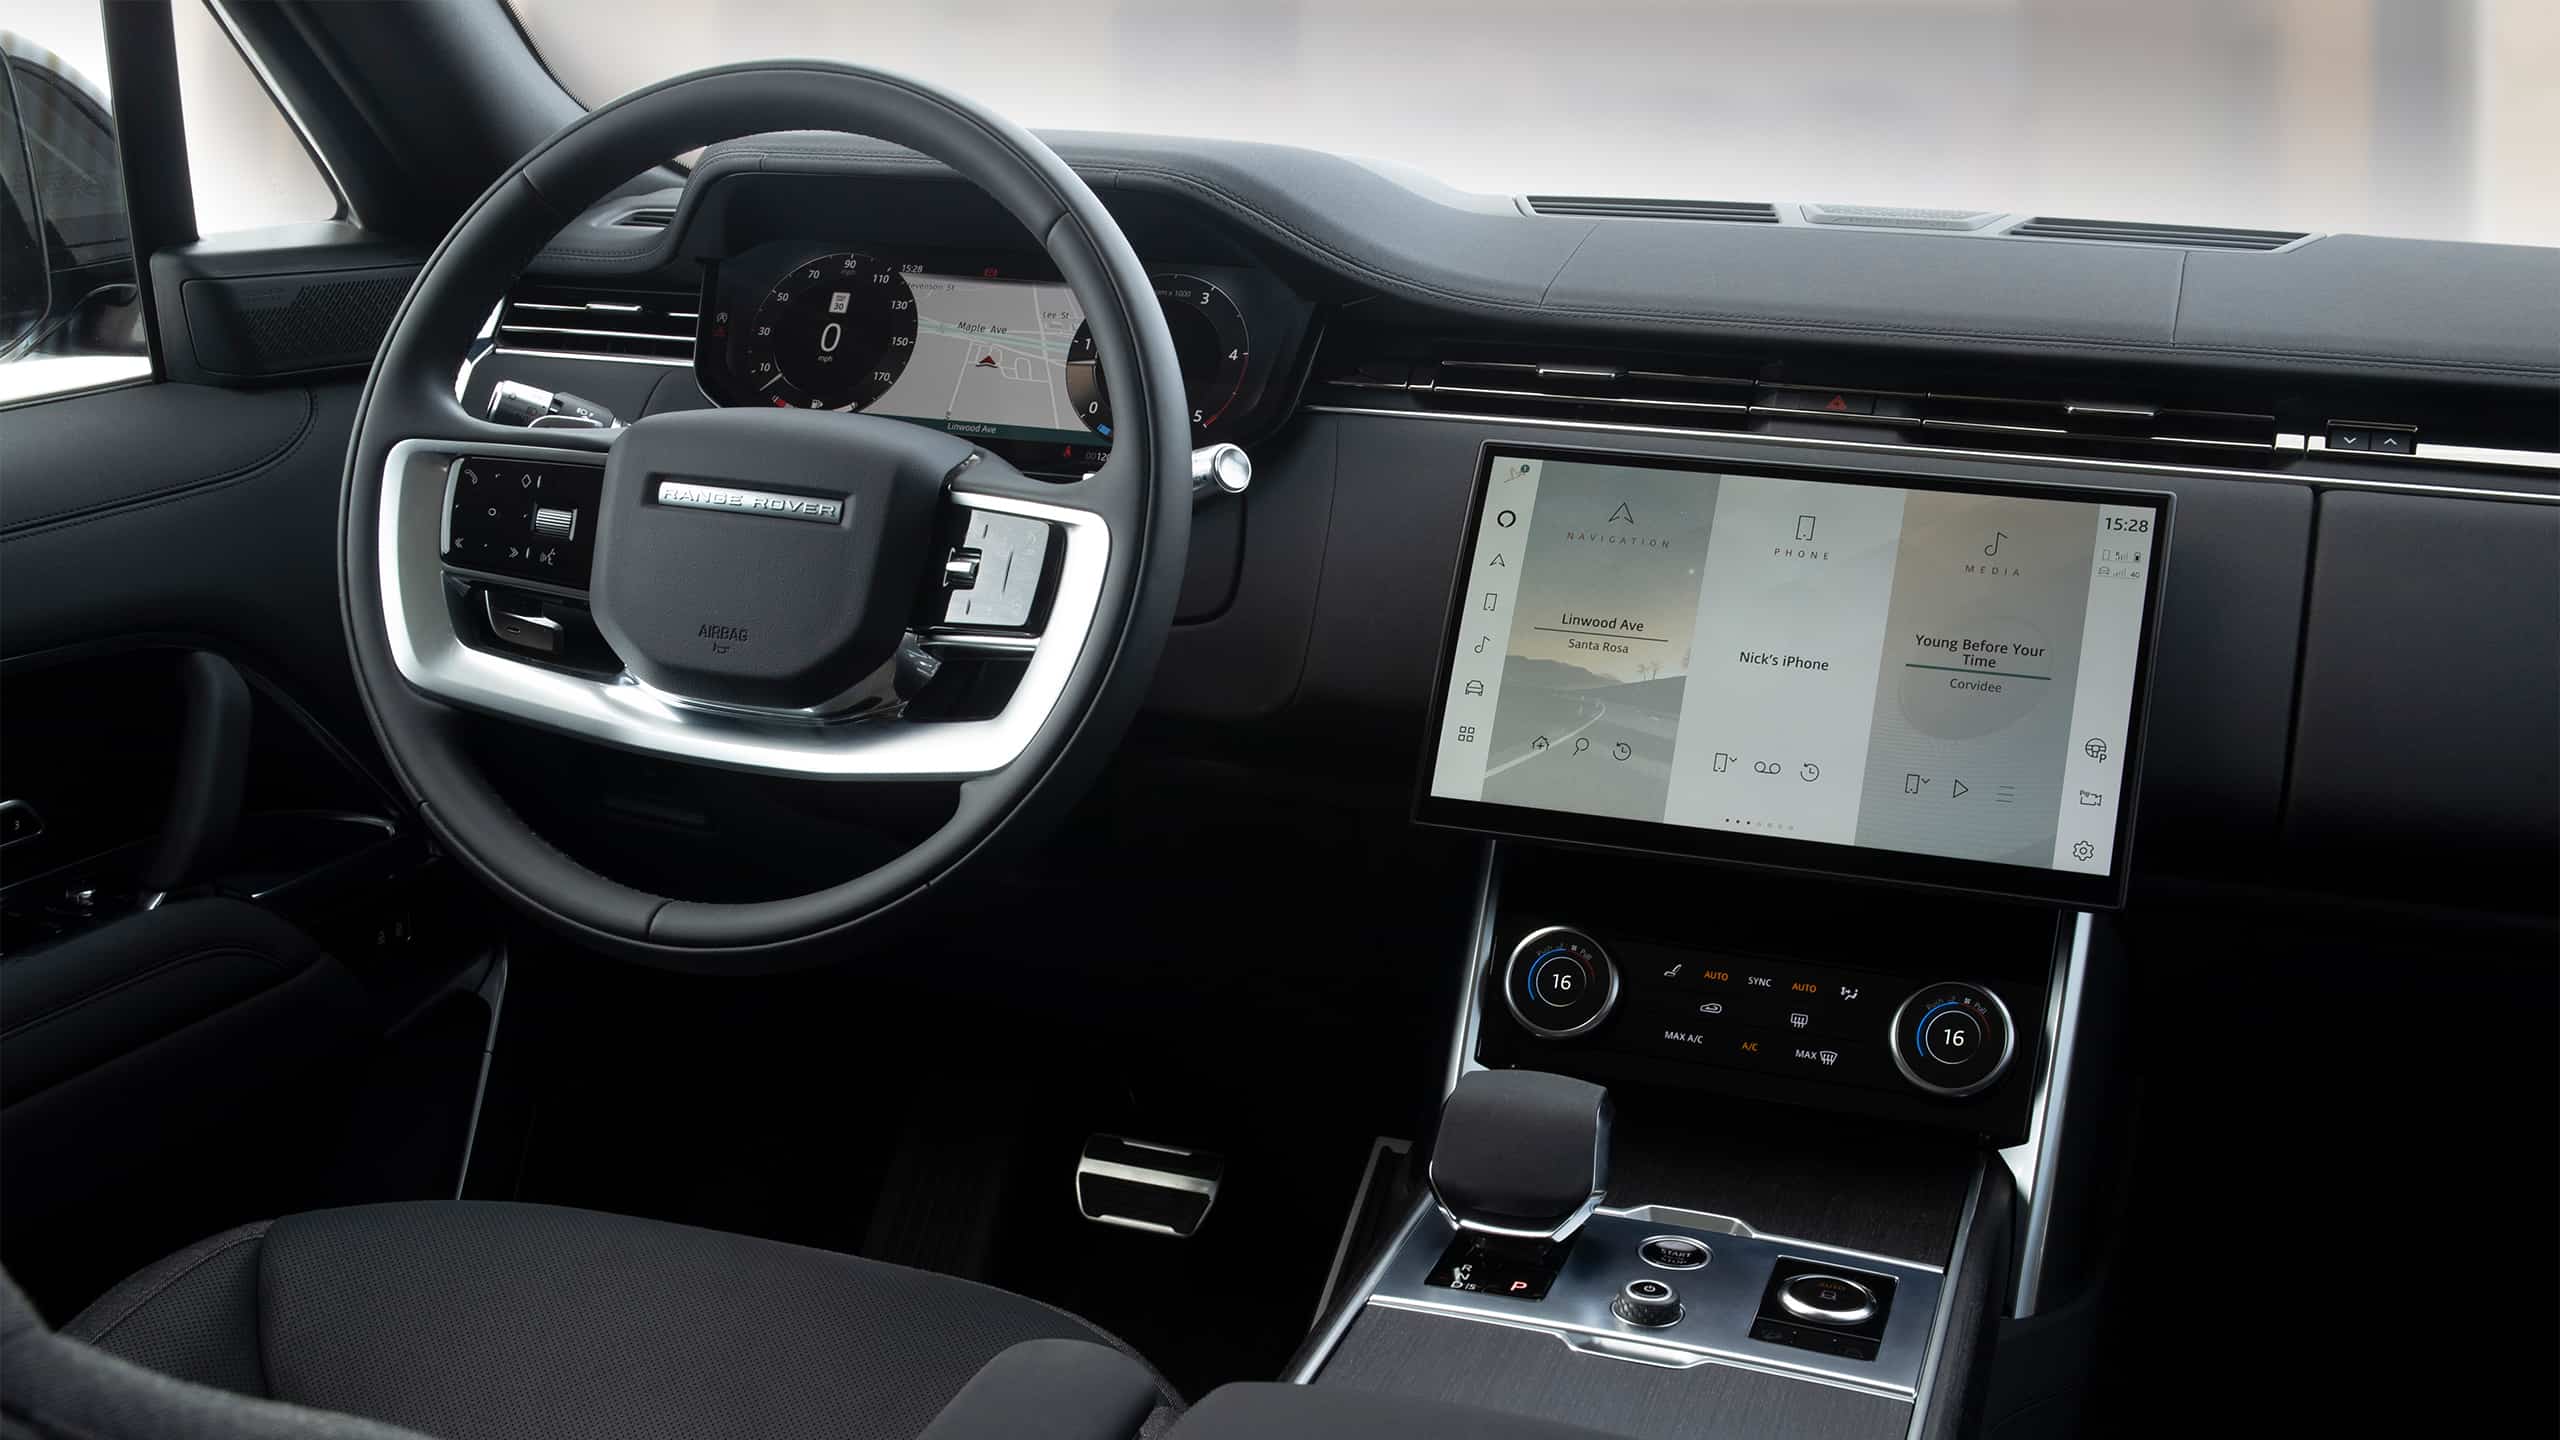 Range Rover cockpit